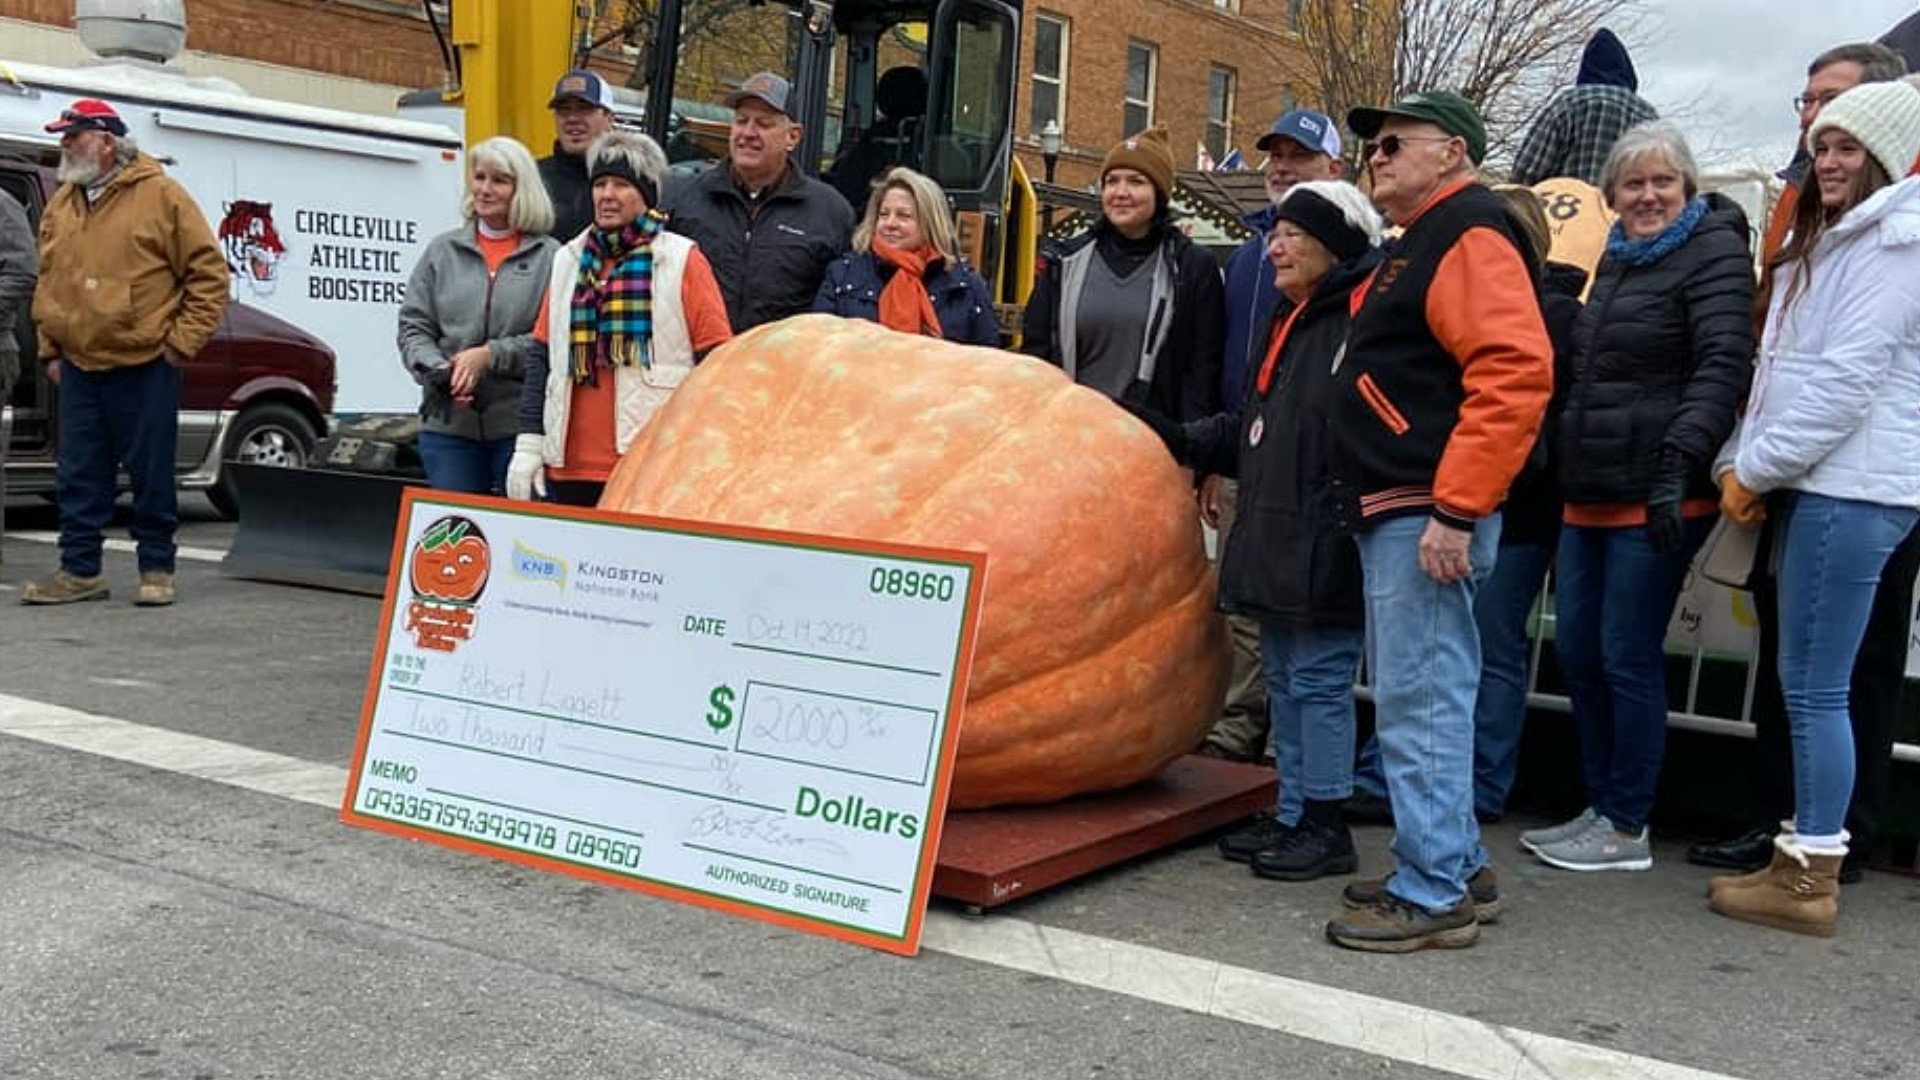 2022 Circleville pumpkin champ weighs in at 1,837 pounds